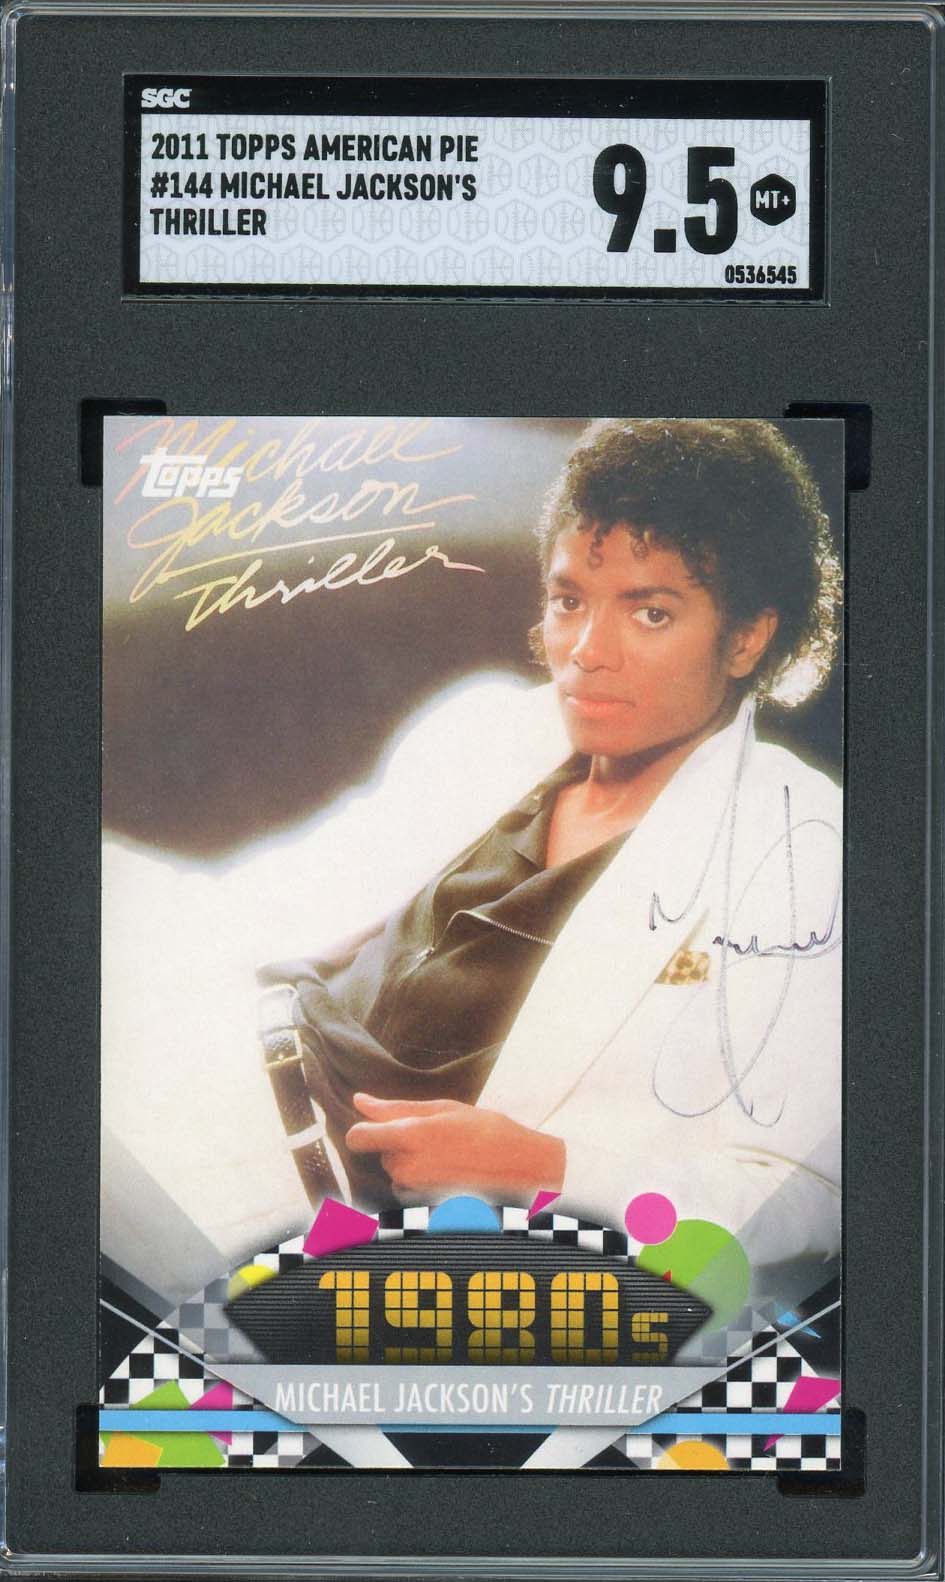 Michael Jackson 2011 Topps American Pie Thriller Card #144 Graded SGC 9.5-Powers Sports Memorabilia